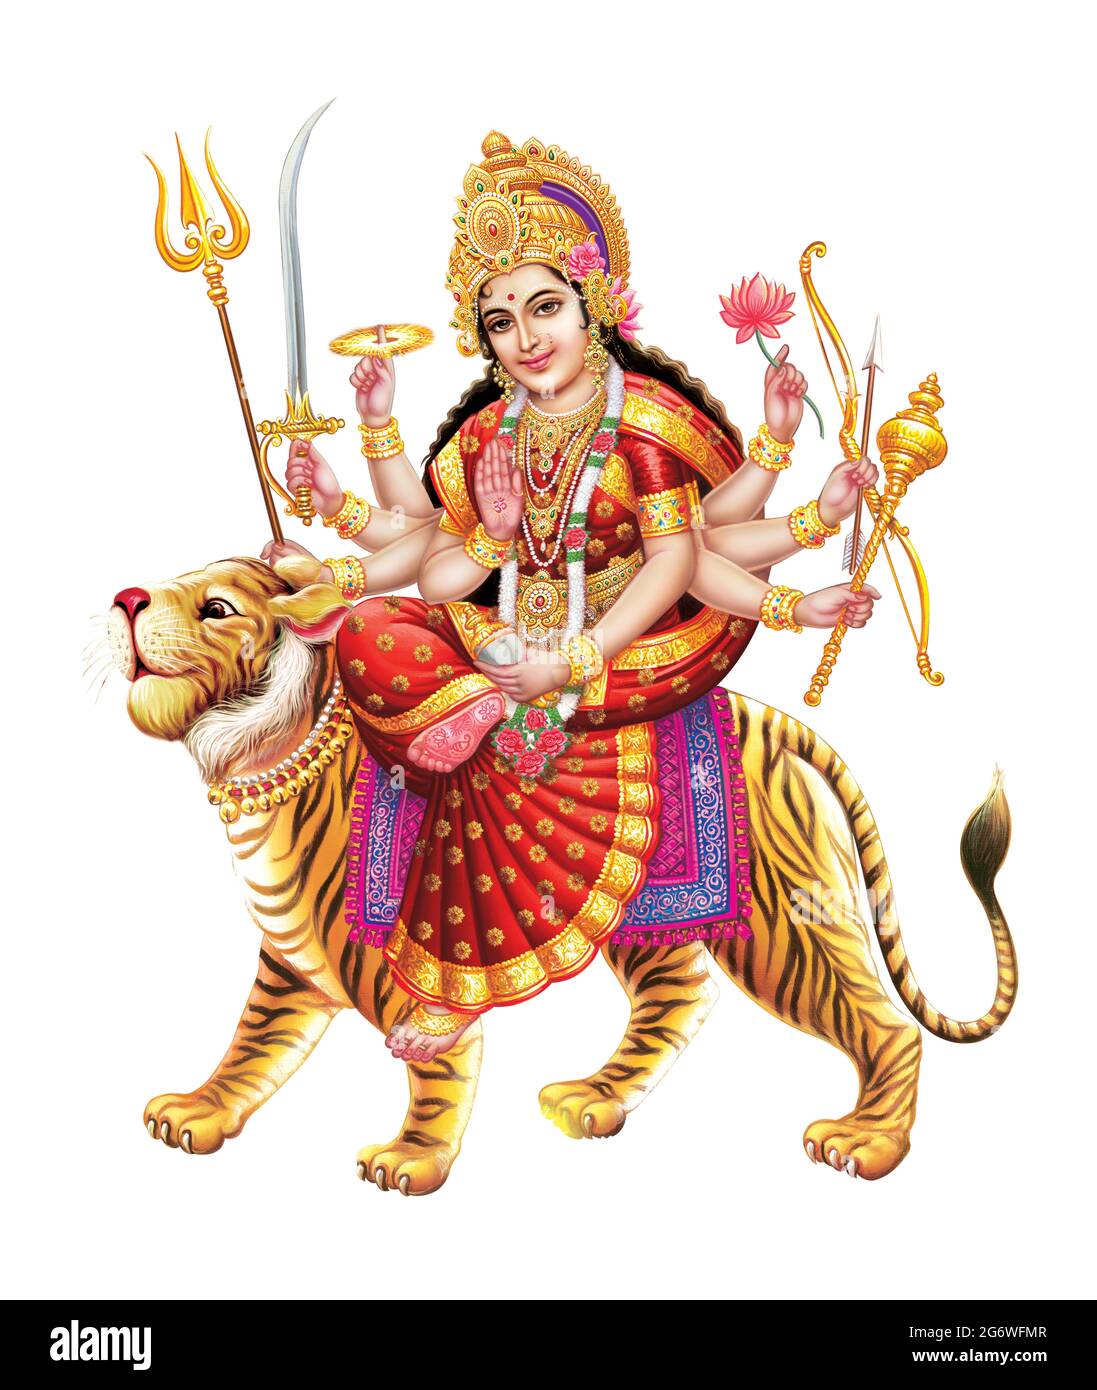 Jai Mata di, Goddess Durga Stock Photography da una tipografia Foto stock -  Alamy